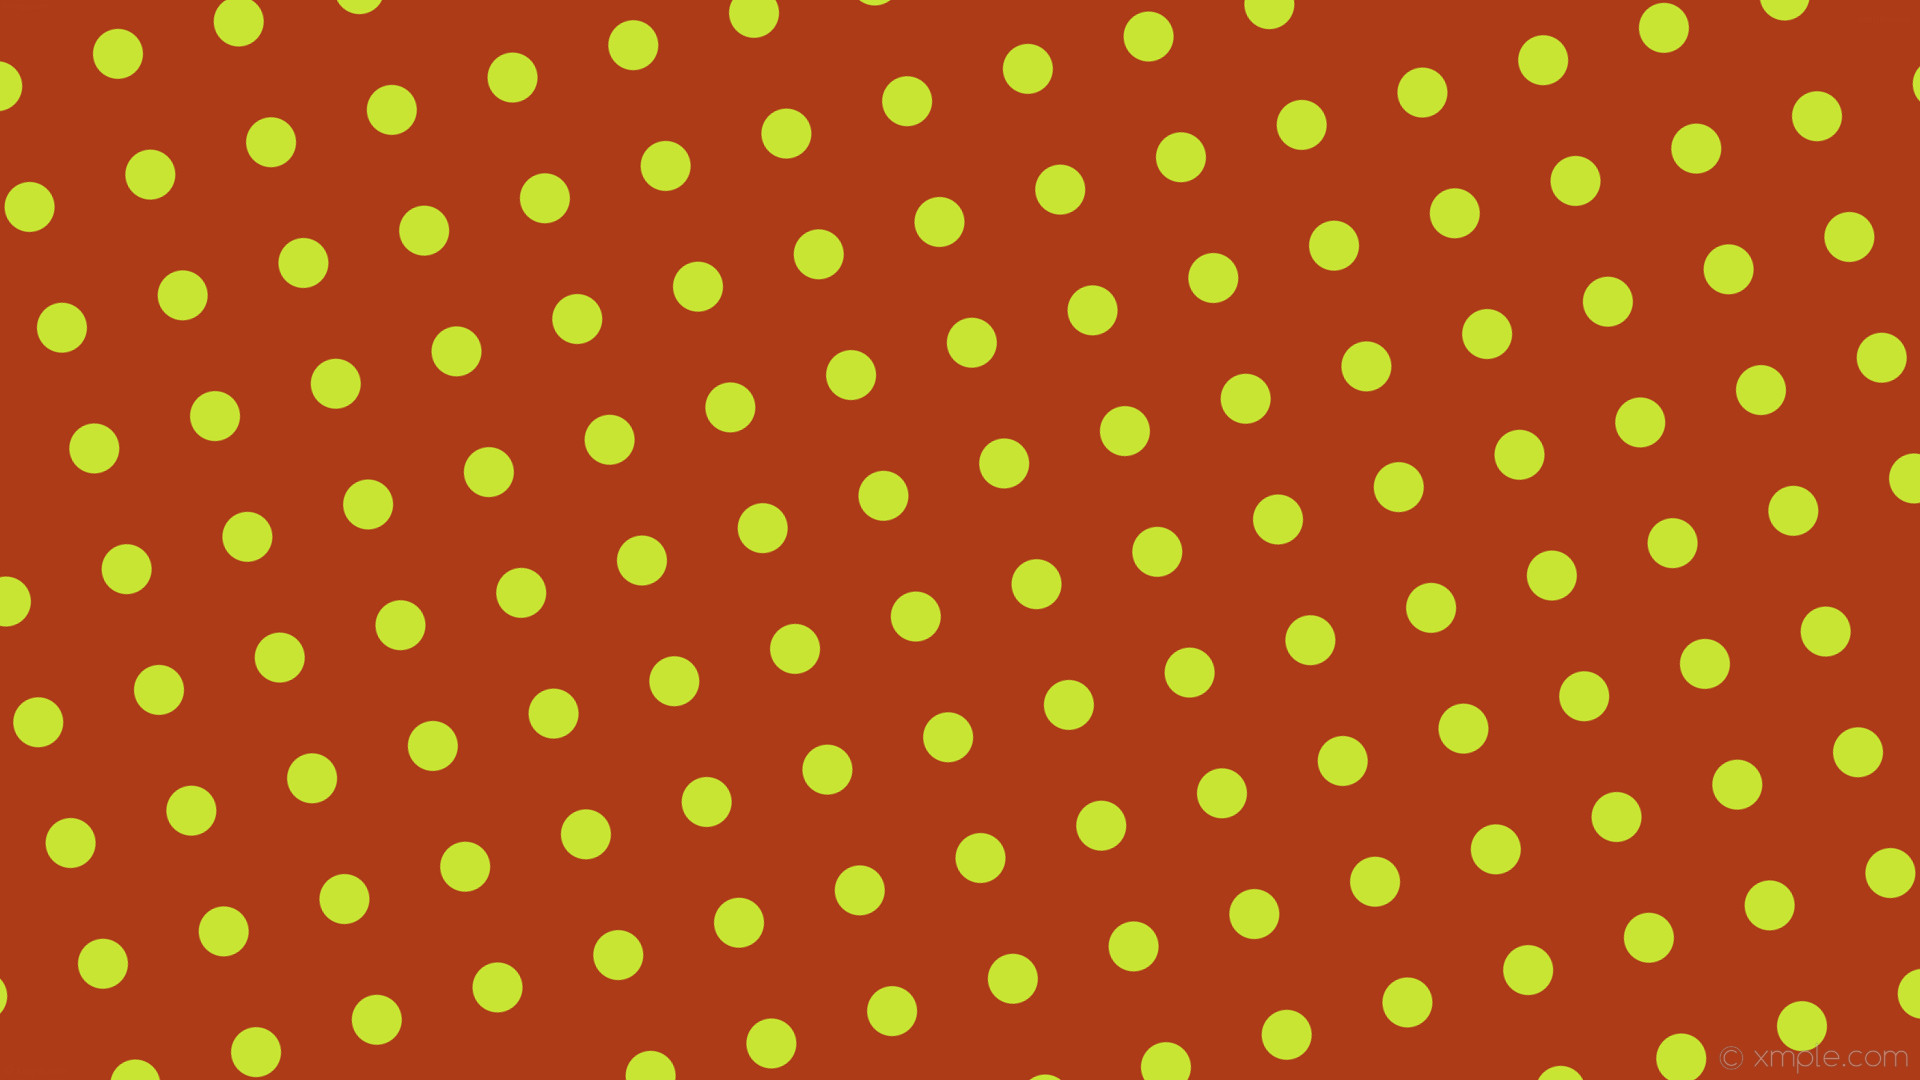 1920x1080 wallpaper spots yellow polka dots red #ad3b18 #c8e533 15Â° 50px 125px